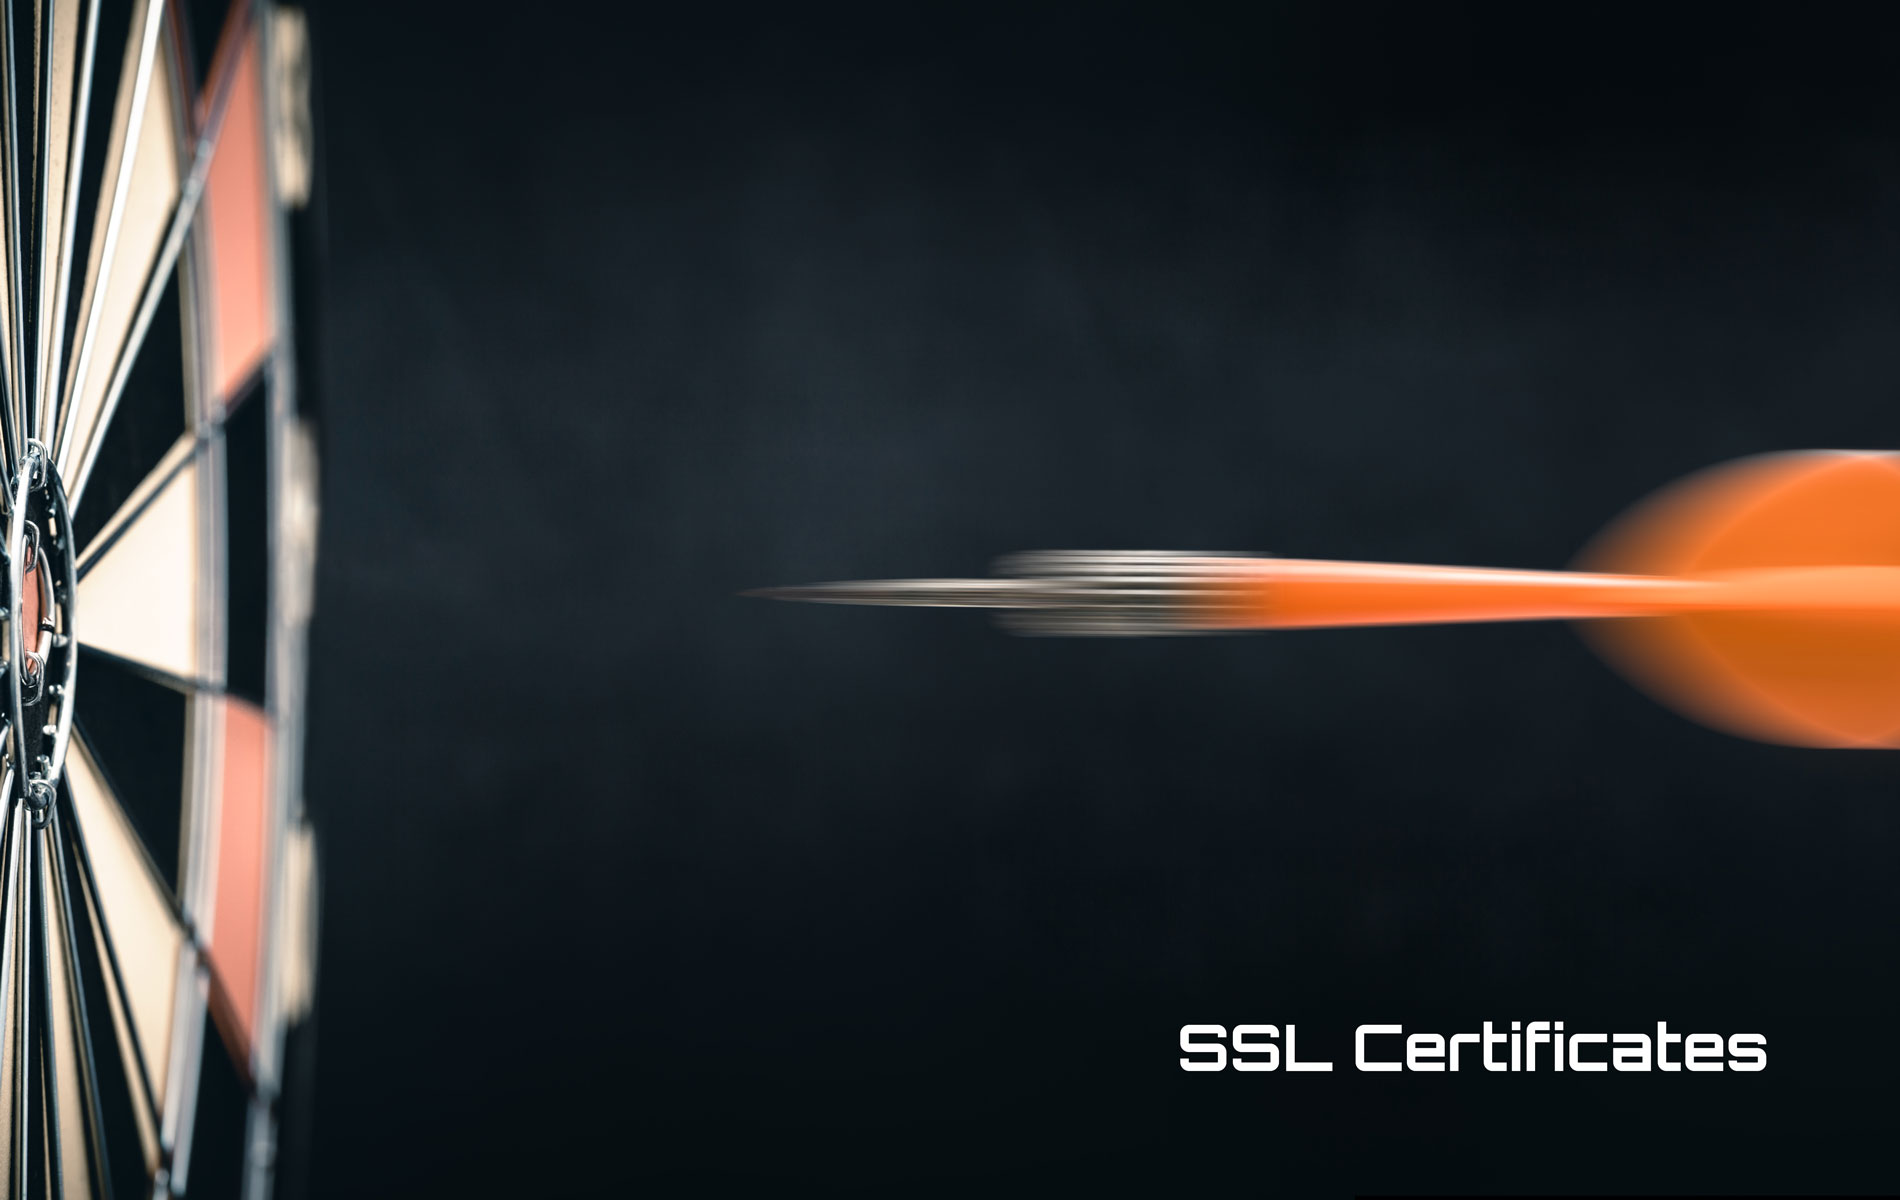 SSL Certificates for your website